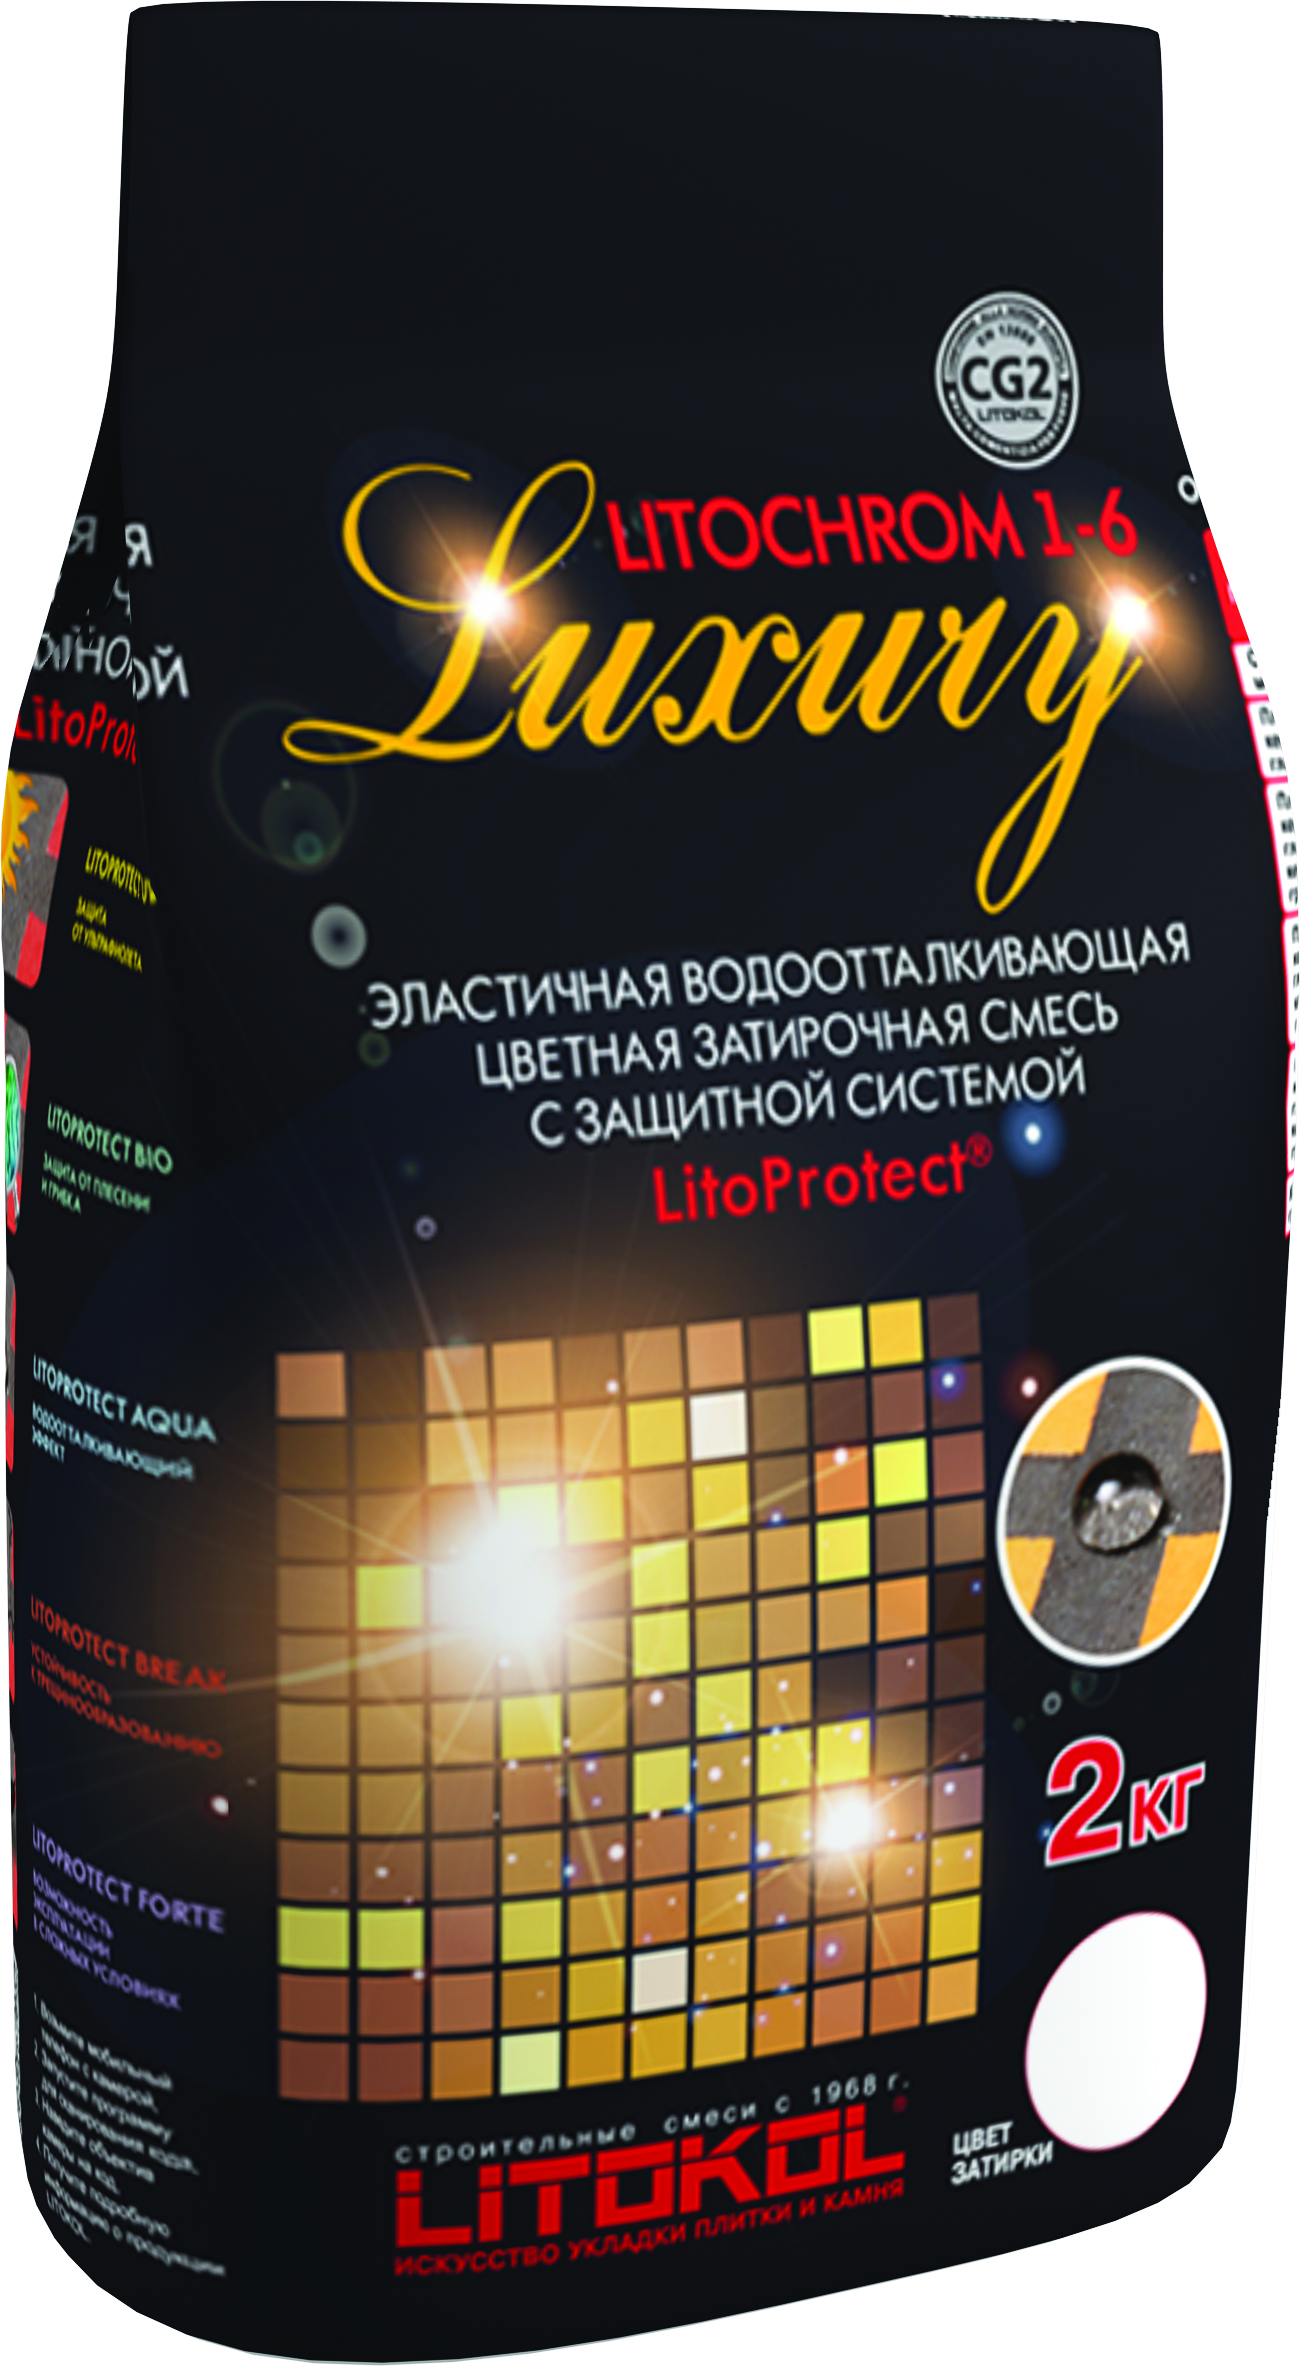 Купить Litokol Litochrom 1-6 Luxury C.470, 2 кг